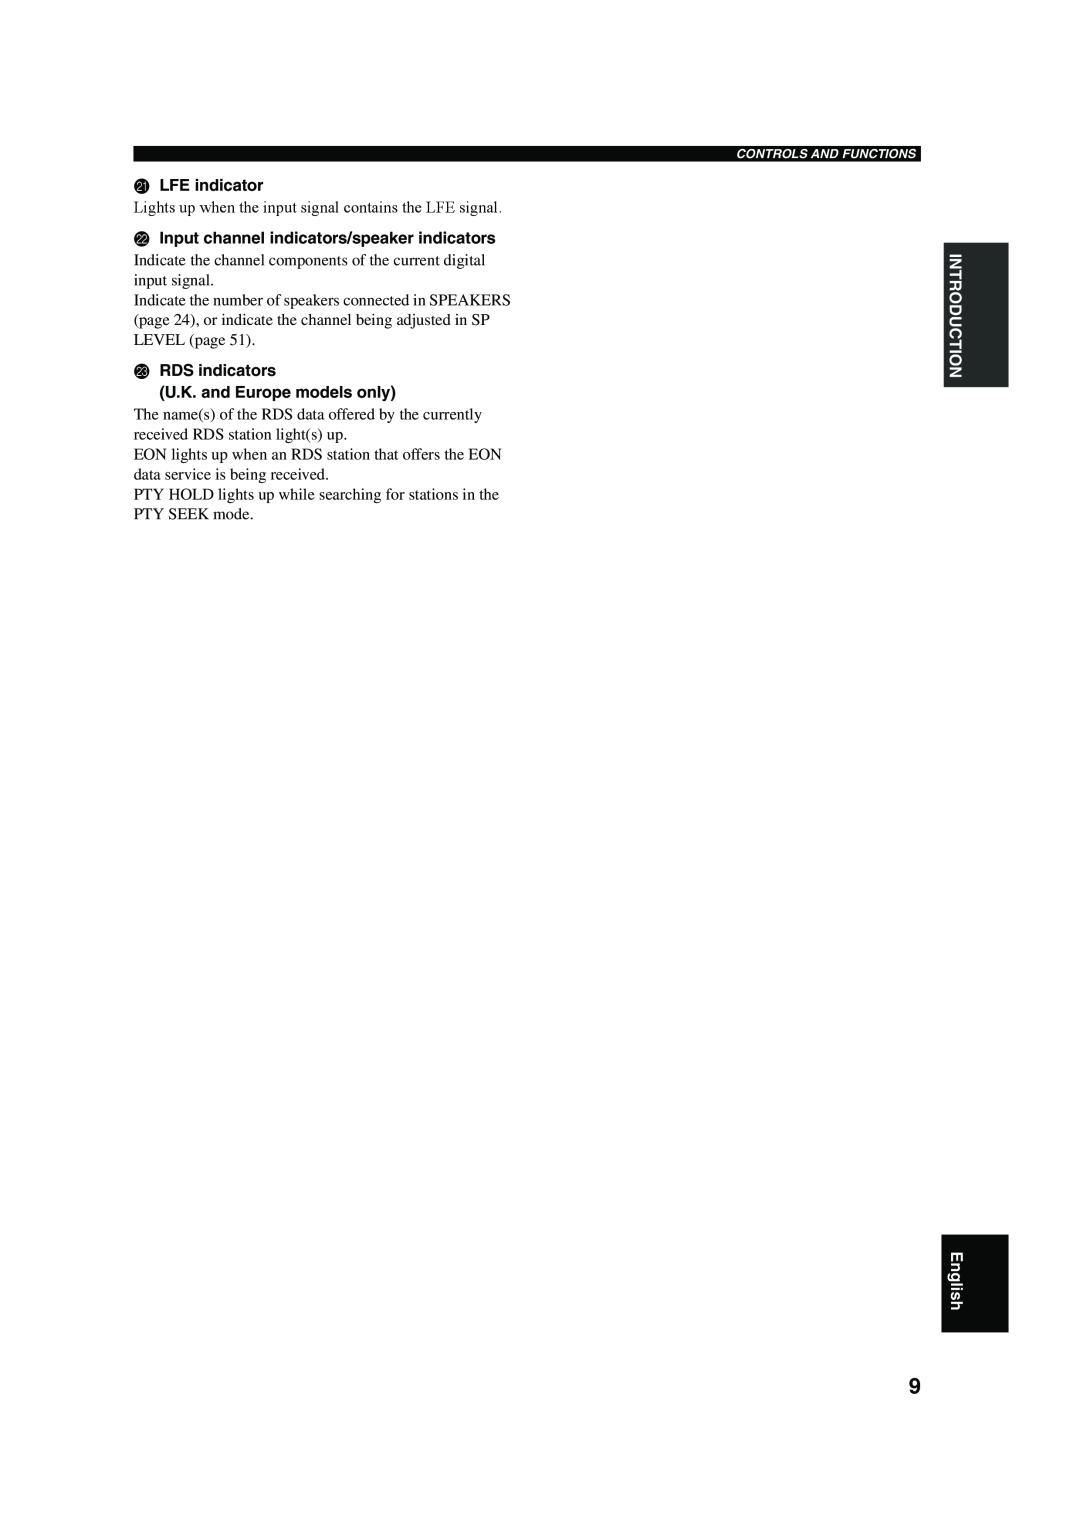 Yamaha RX-V550 KLFE indicator, LInput channel indicators/speaker indicators, MRDS indicators U.K. and Europe models only 